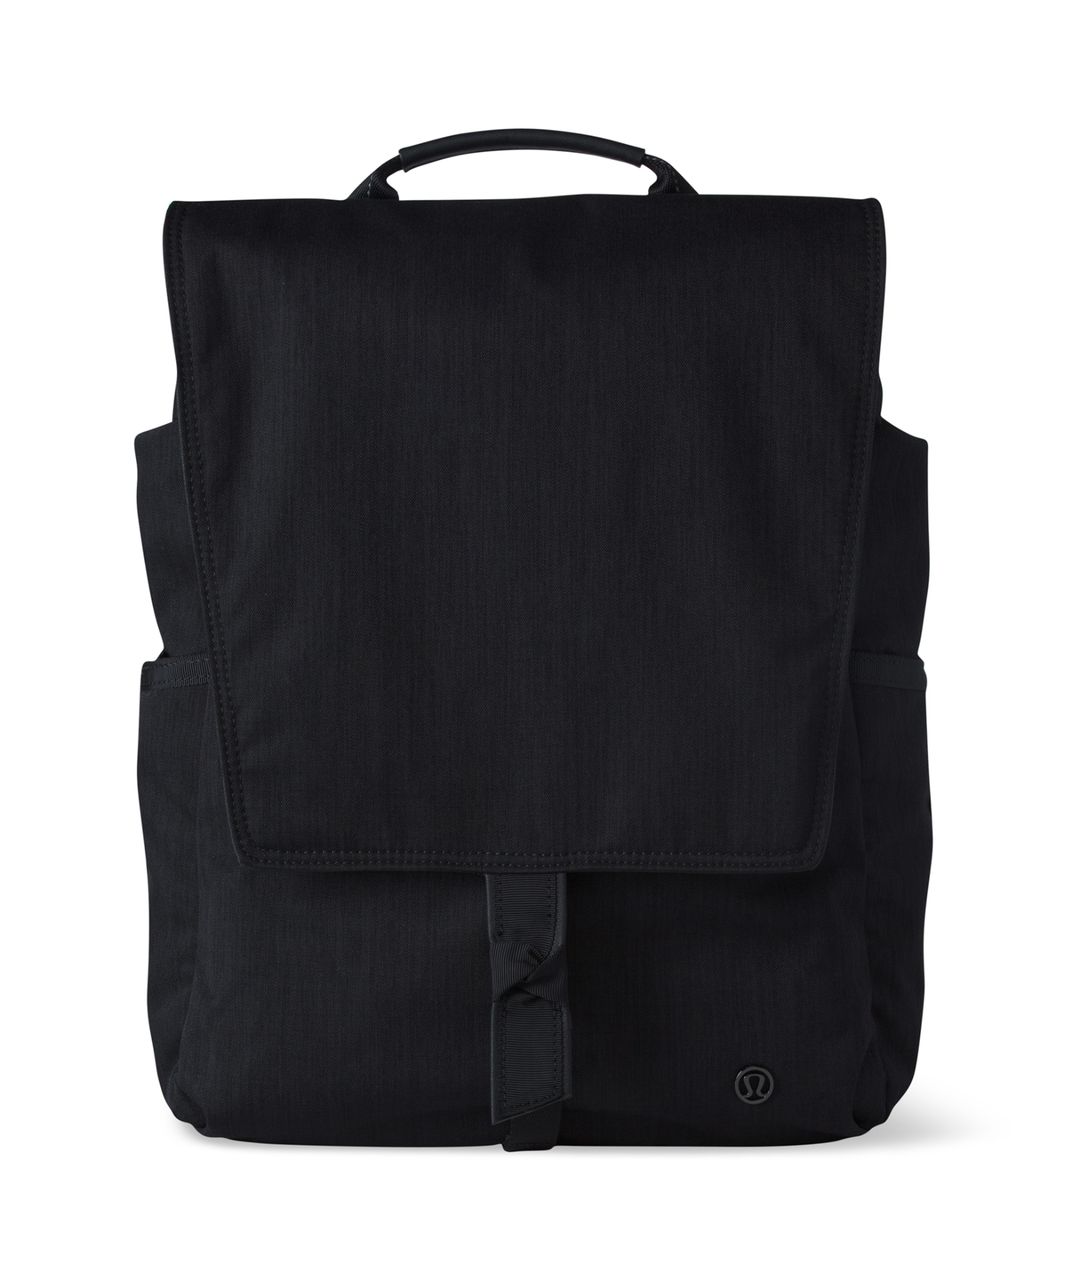 Lululemon Urbanite Backpack - Black